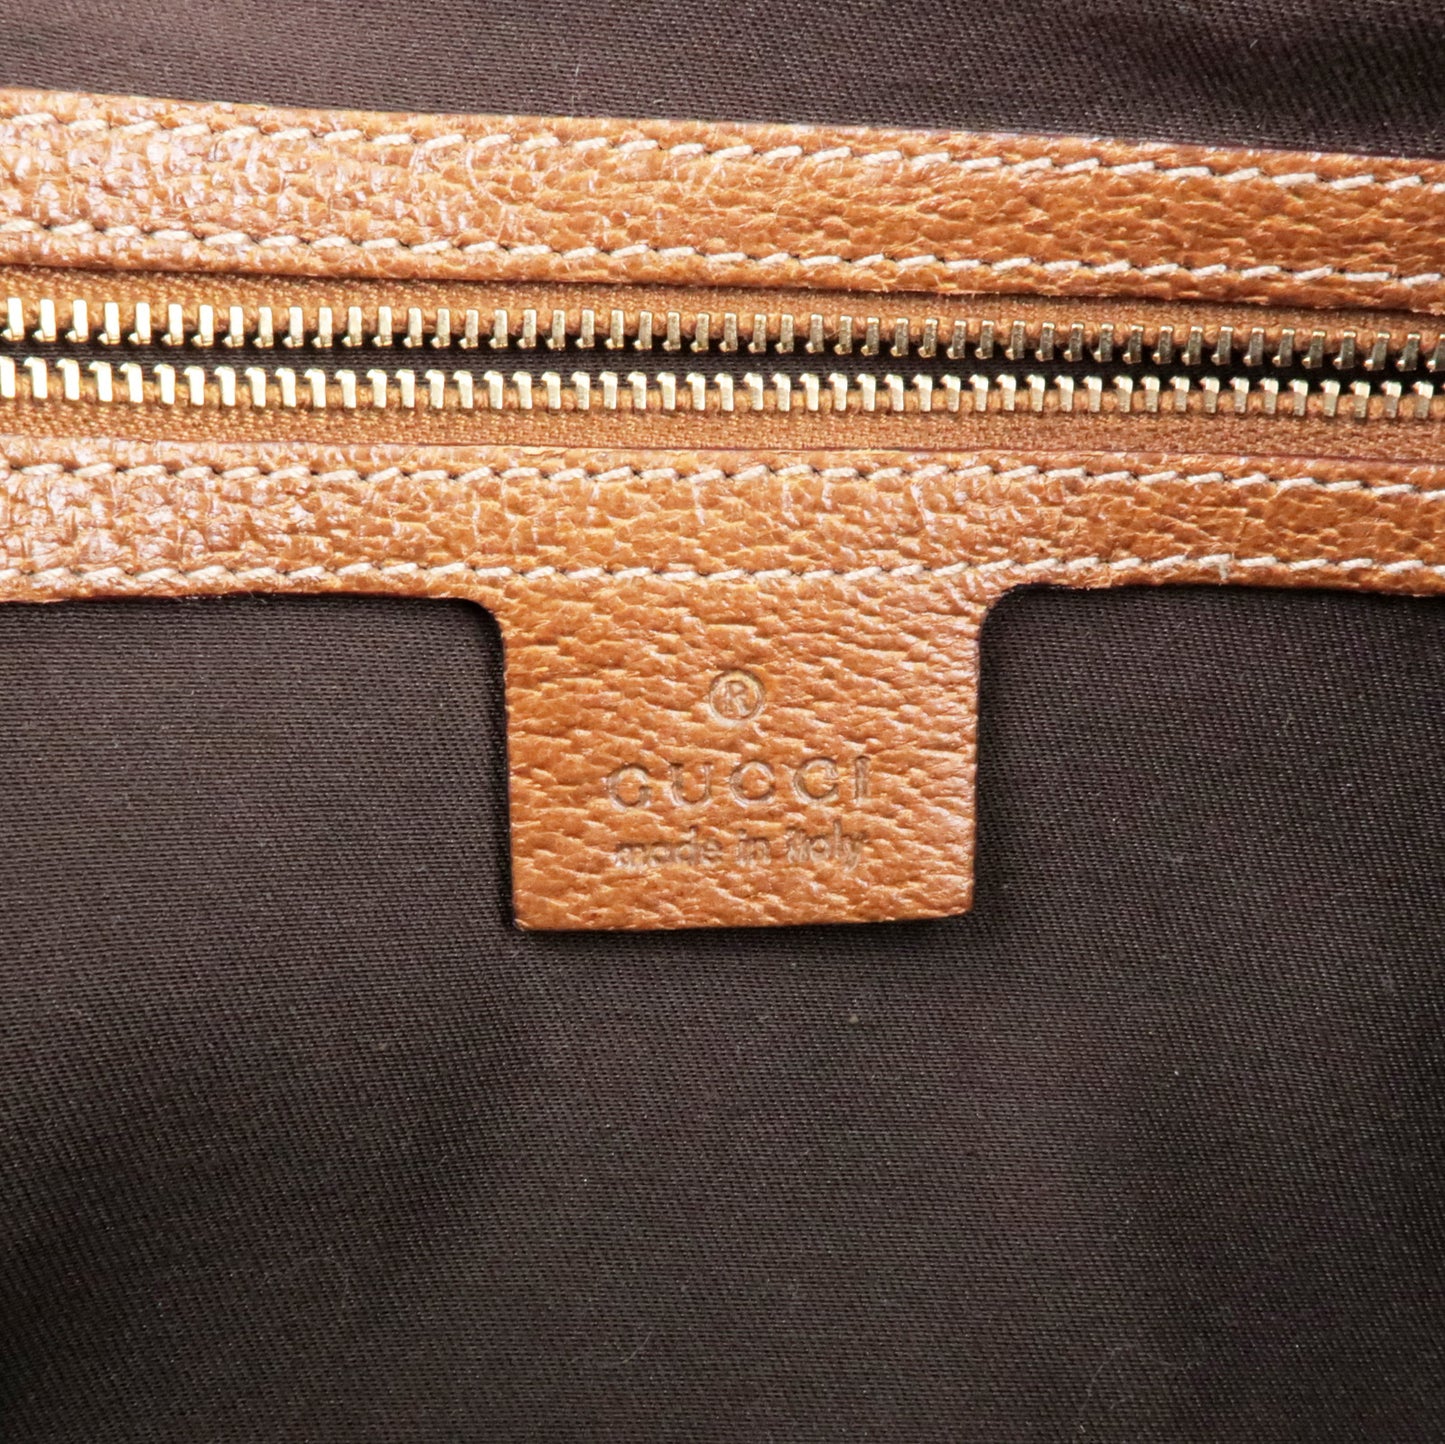 GUCCI GG Canvas Leather Shoulder Bag Beige Brown 124407